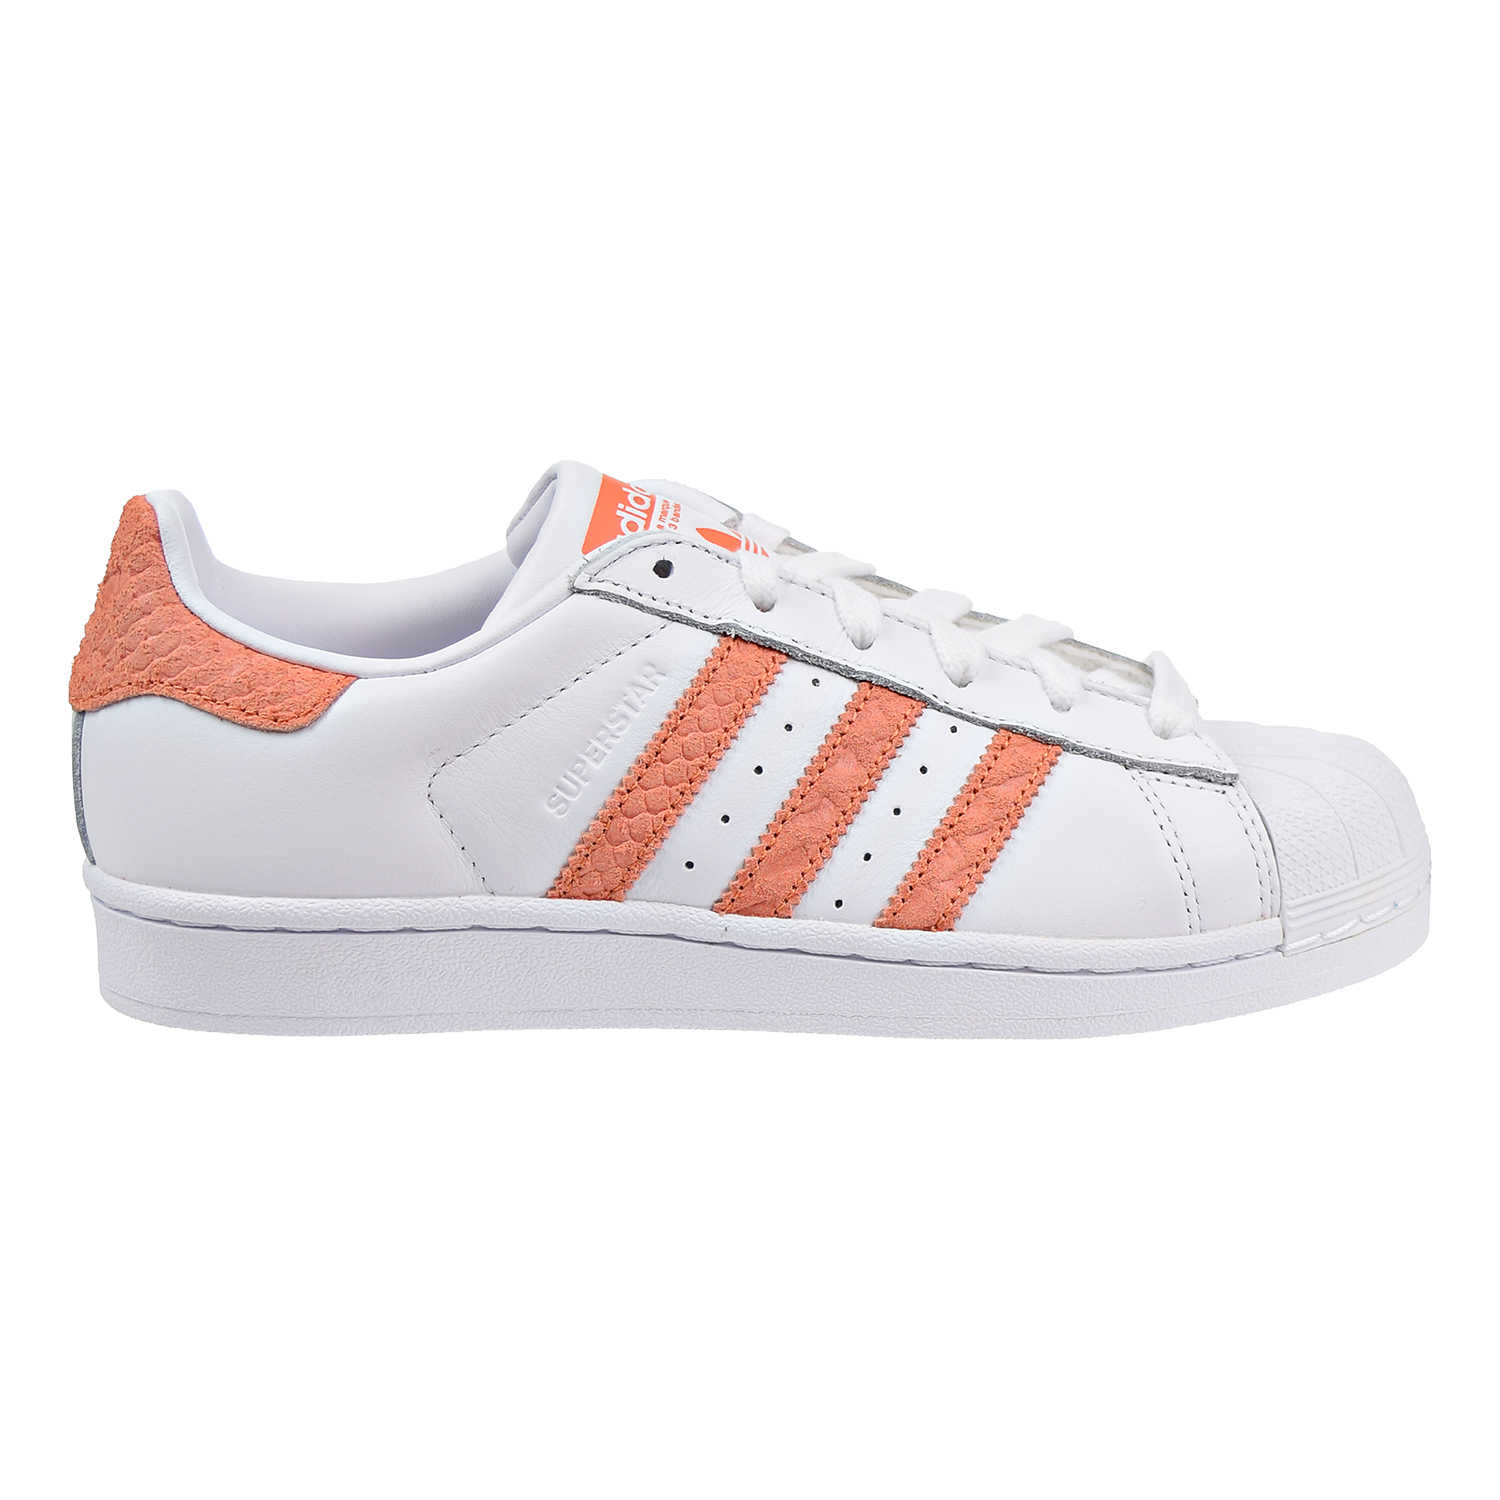 Adidas Superstar W Women's Shoes Footwear White-Chalk Coral-Off White  cg5462 | eBay